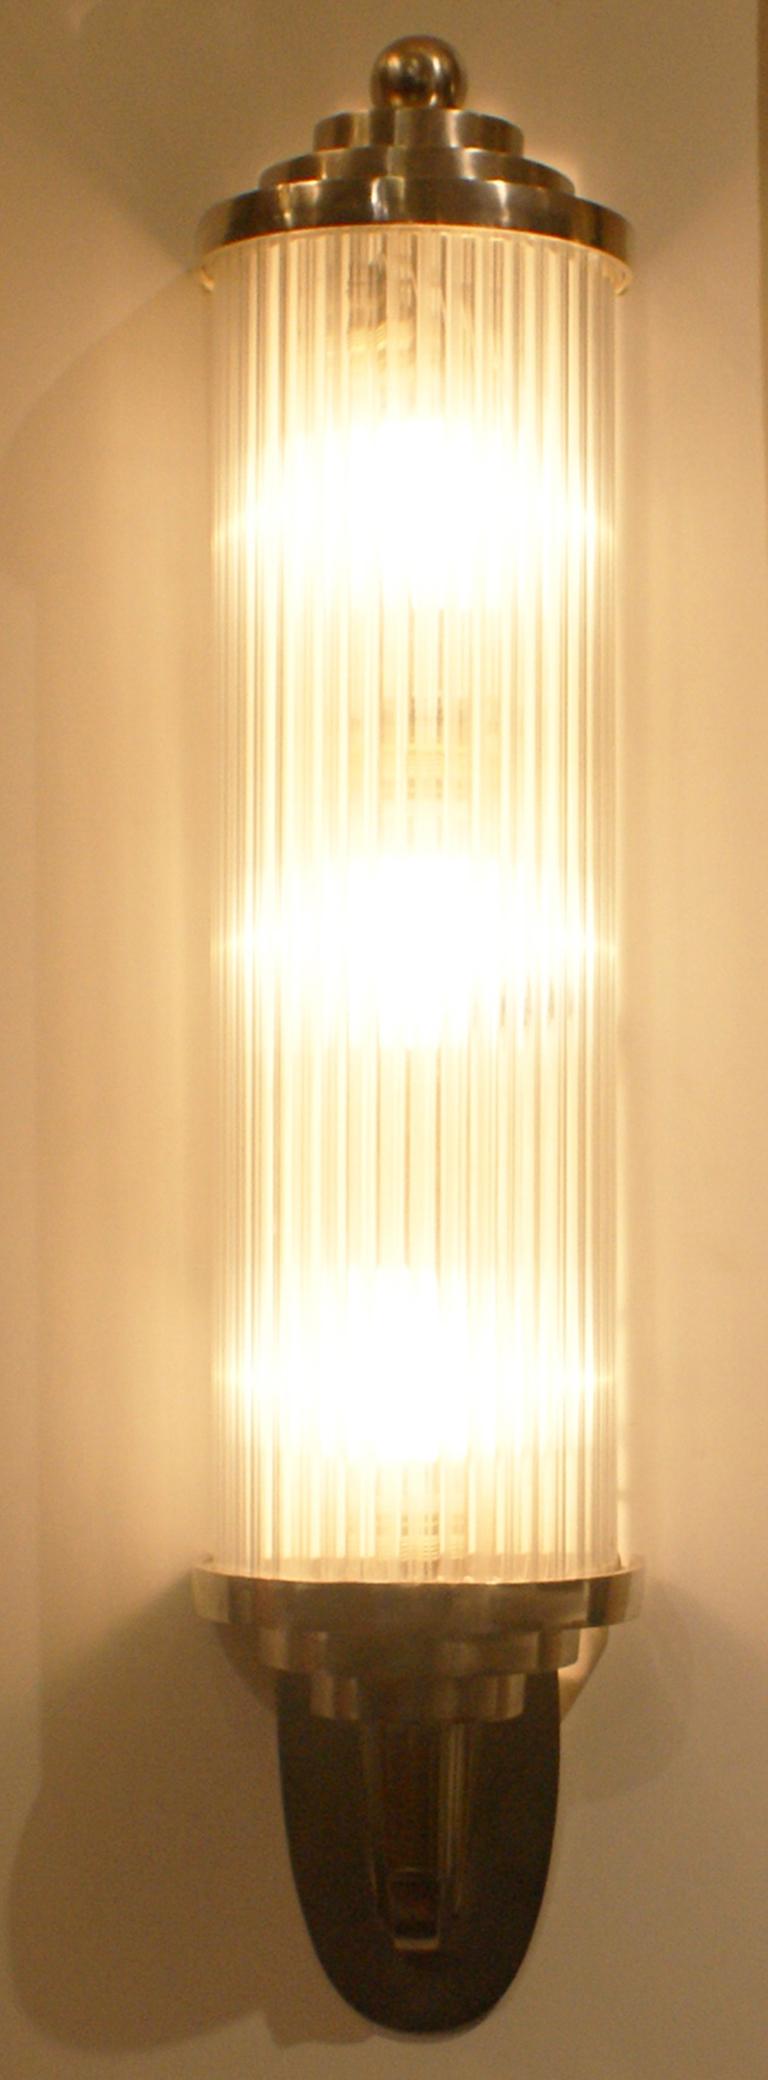 art deco wall lighting